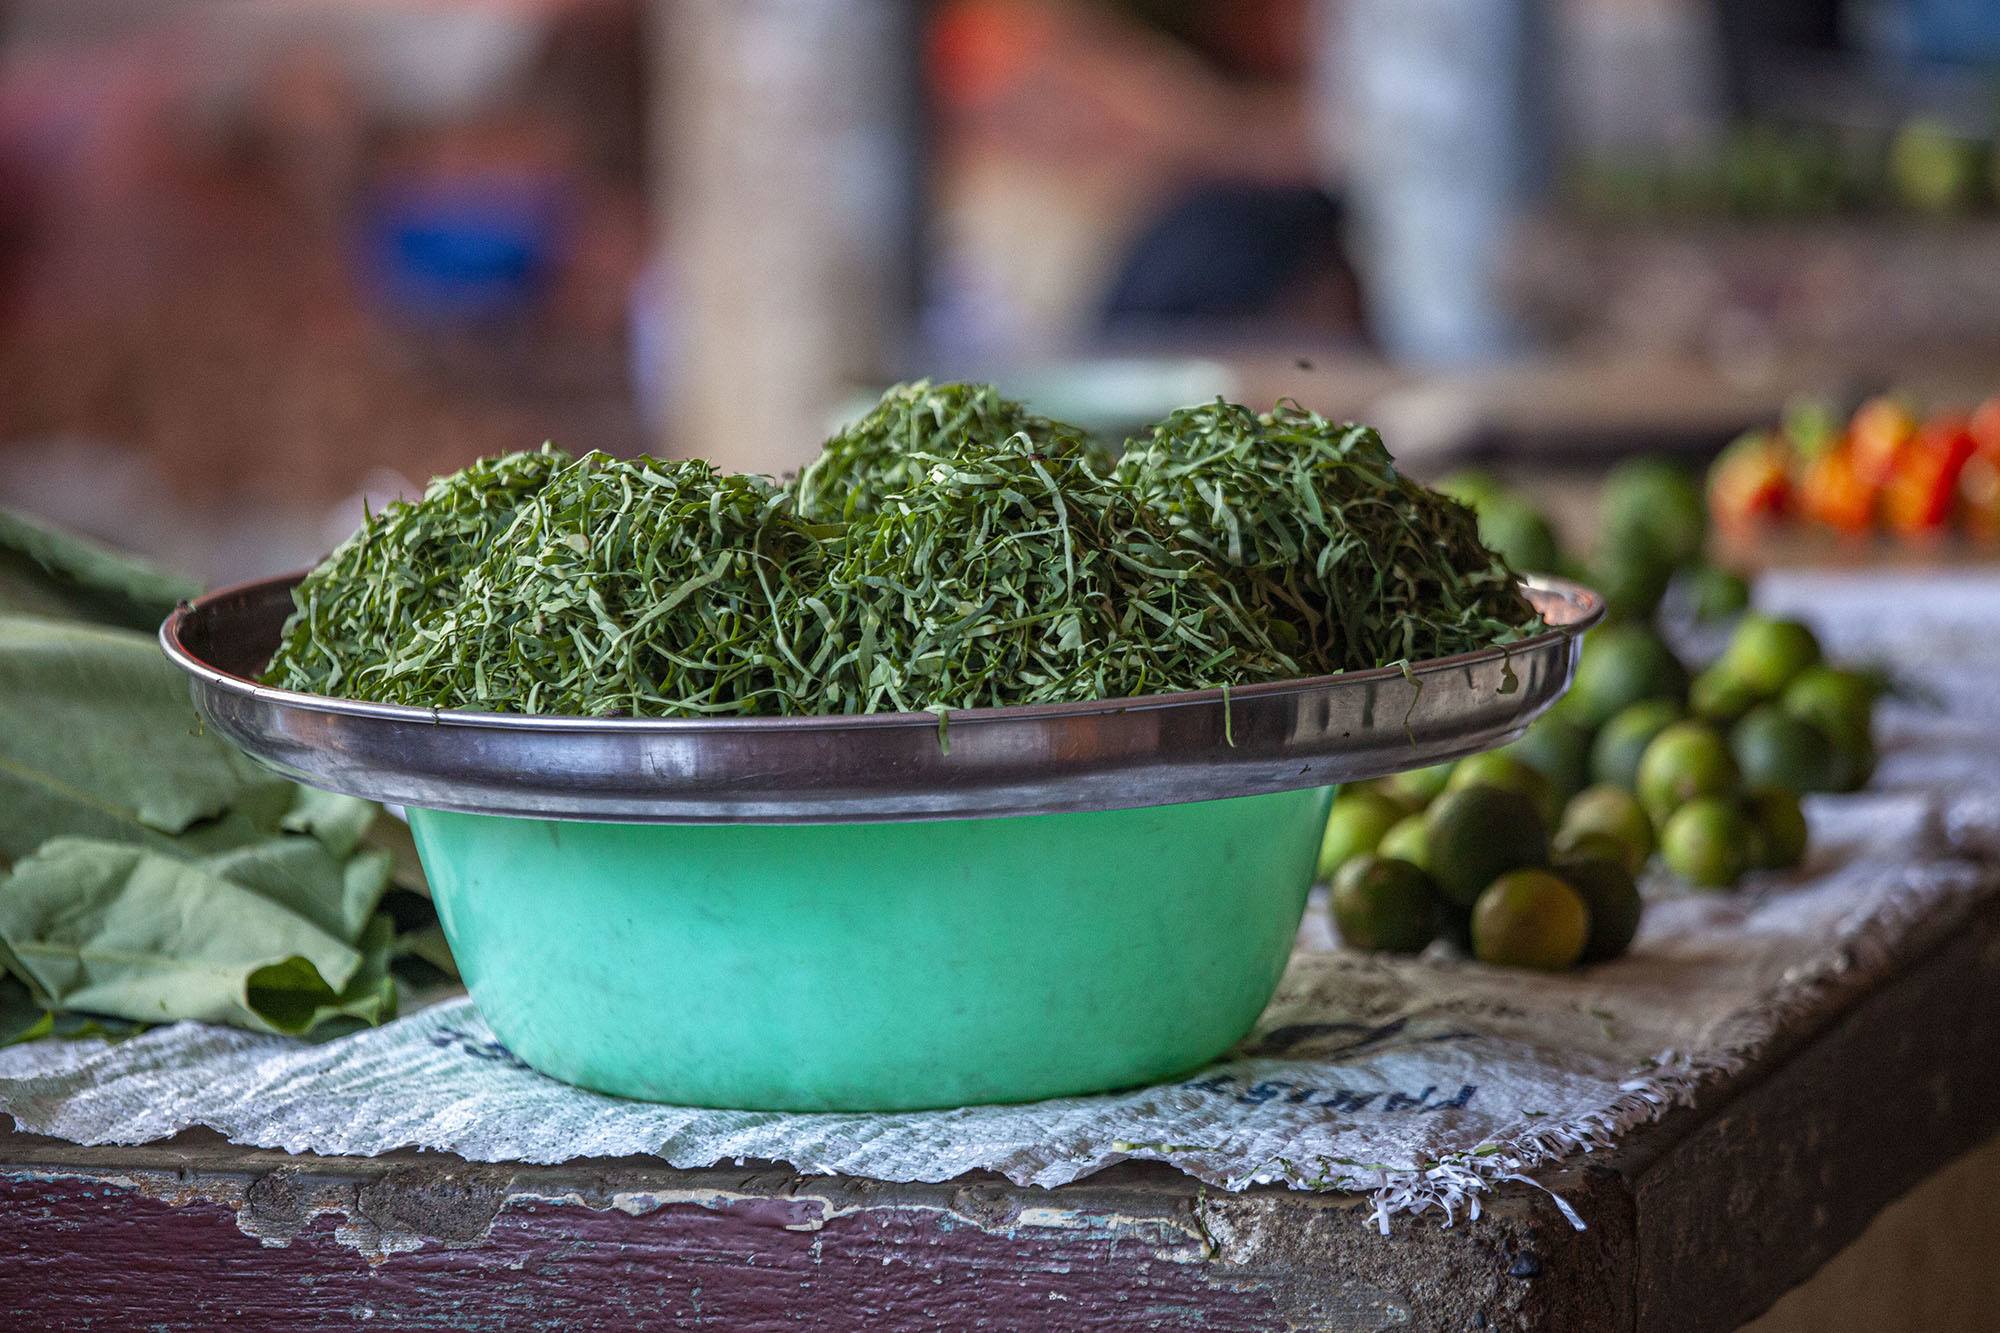 Greens and limes on display at municipal market in Mutsamudu Anjouan Comoros